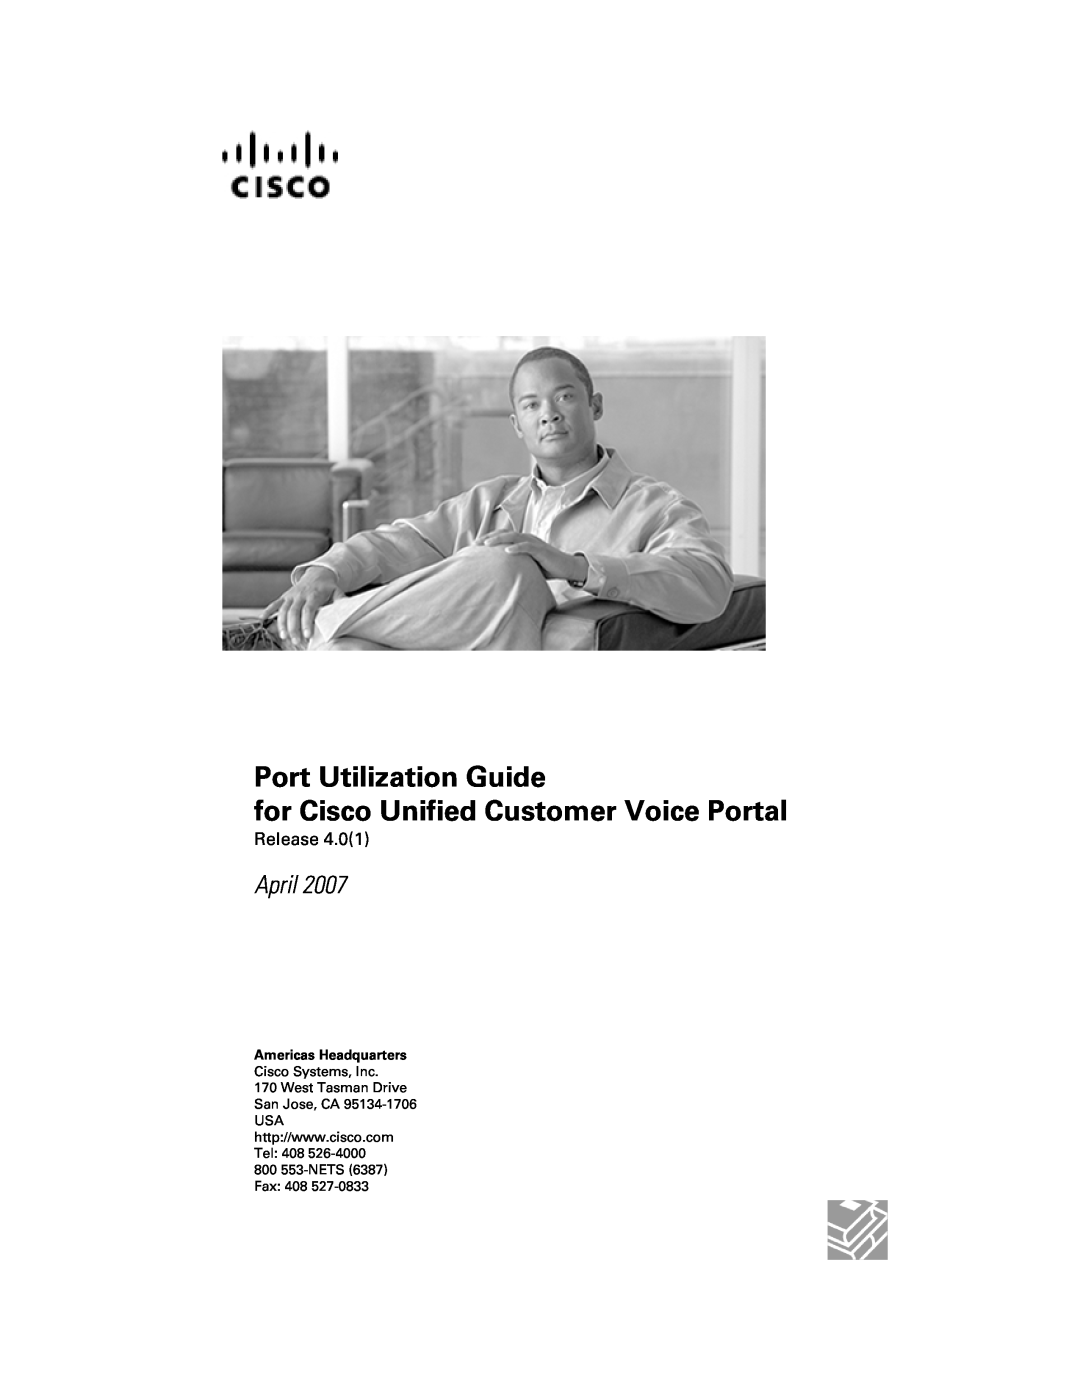 Cisco Systems 4.0(1) manual Port Utilization Guide for Cisco Unified Customer Voice Portal, April, Release 